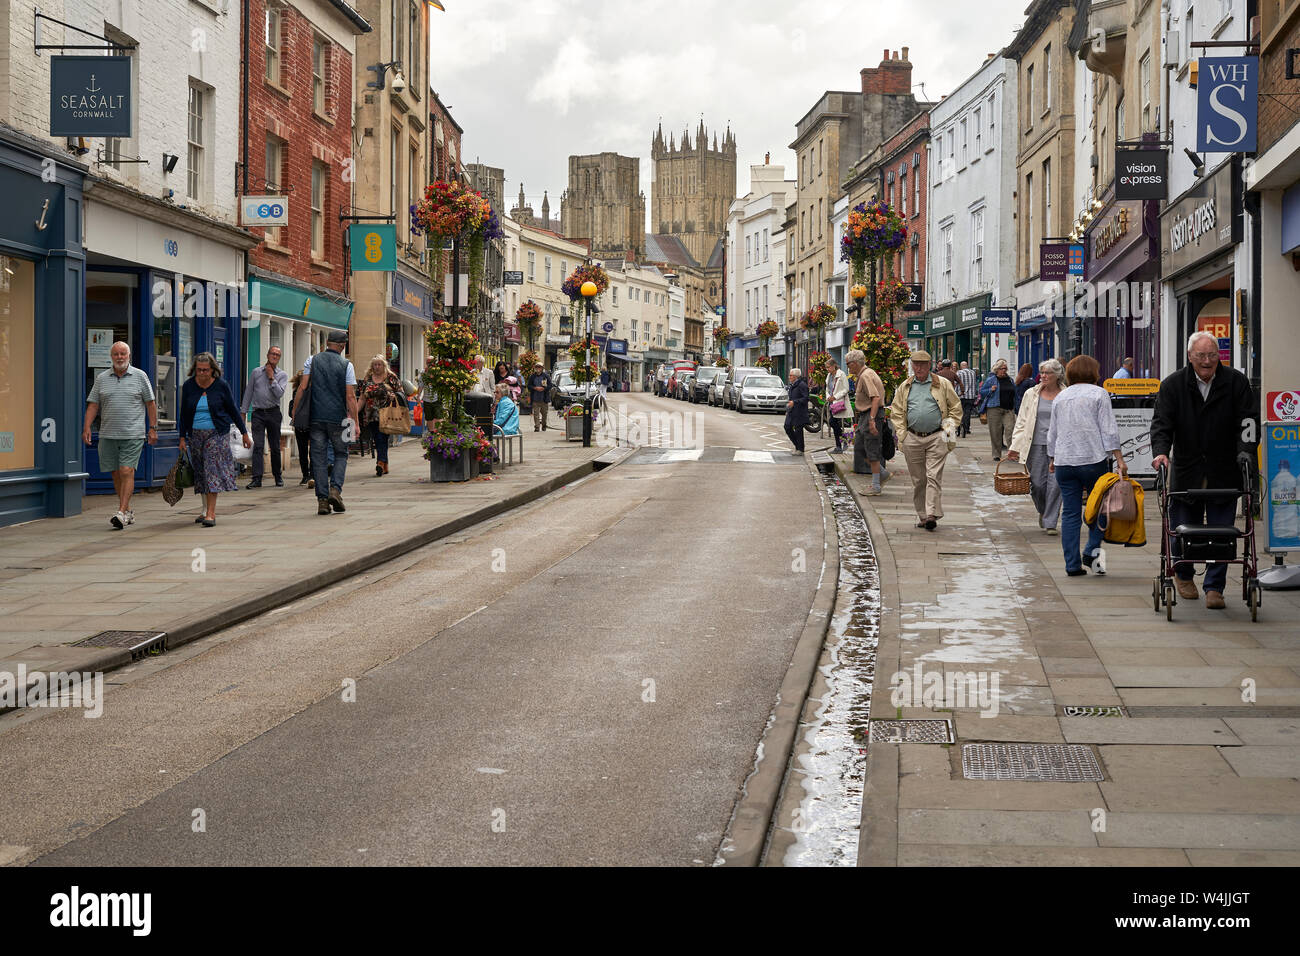 High-Street scene in the City of Wells, Somerset, UK Stock Photo